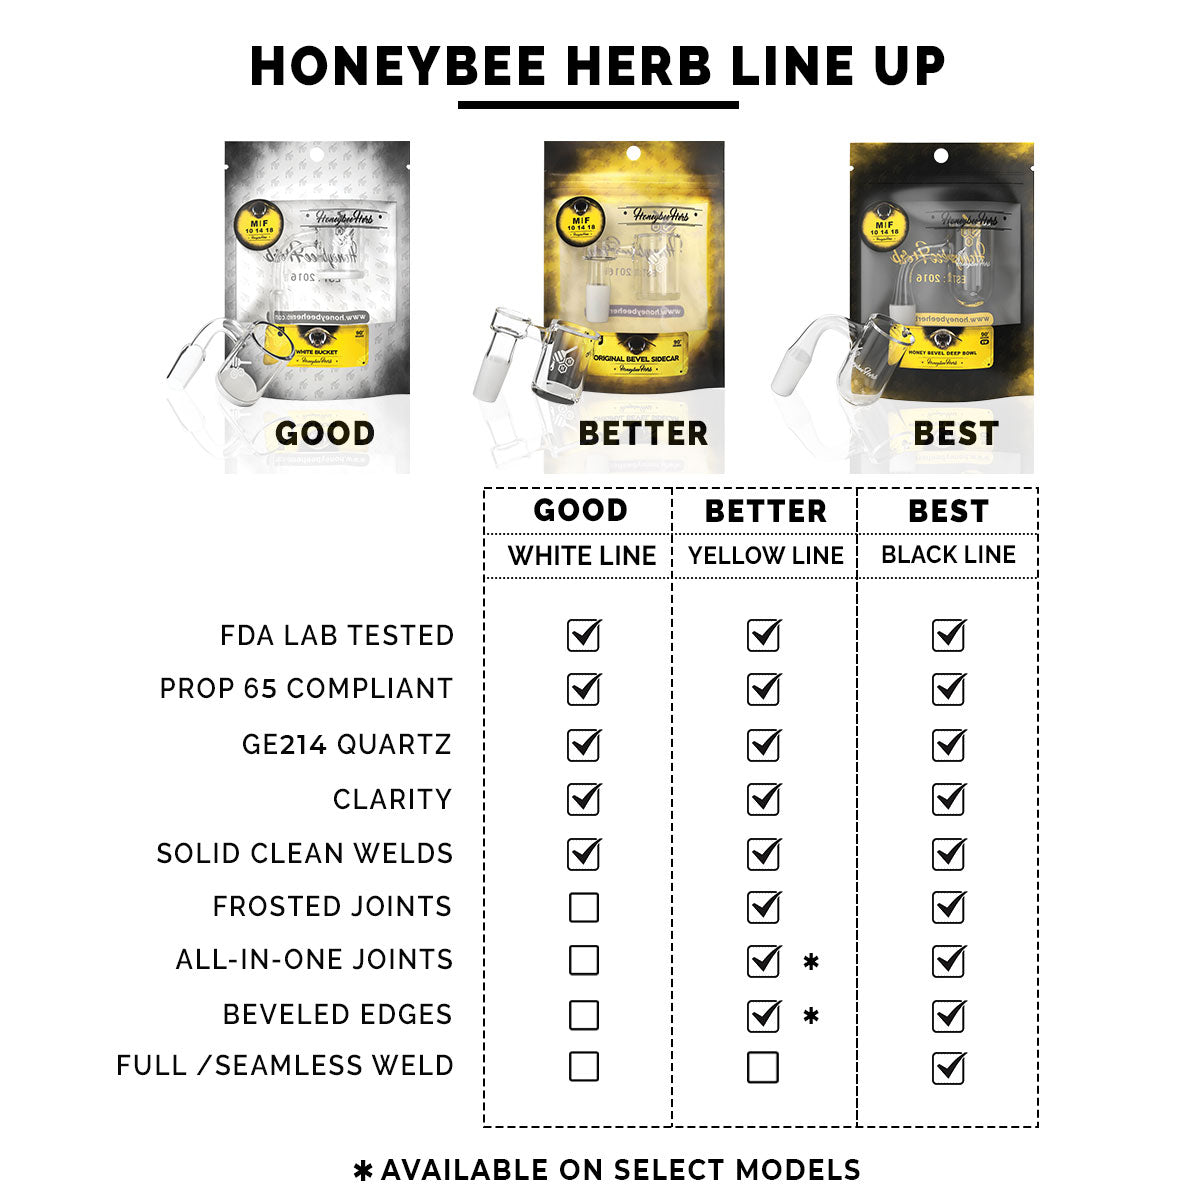 Honeybee Herb Quartz Banger comparison chart, highlighting features from Good to Best